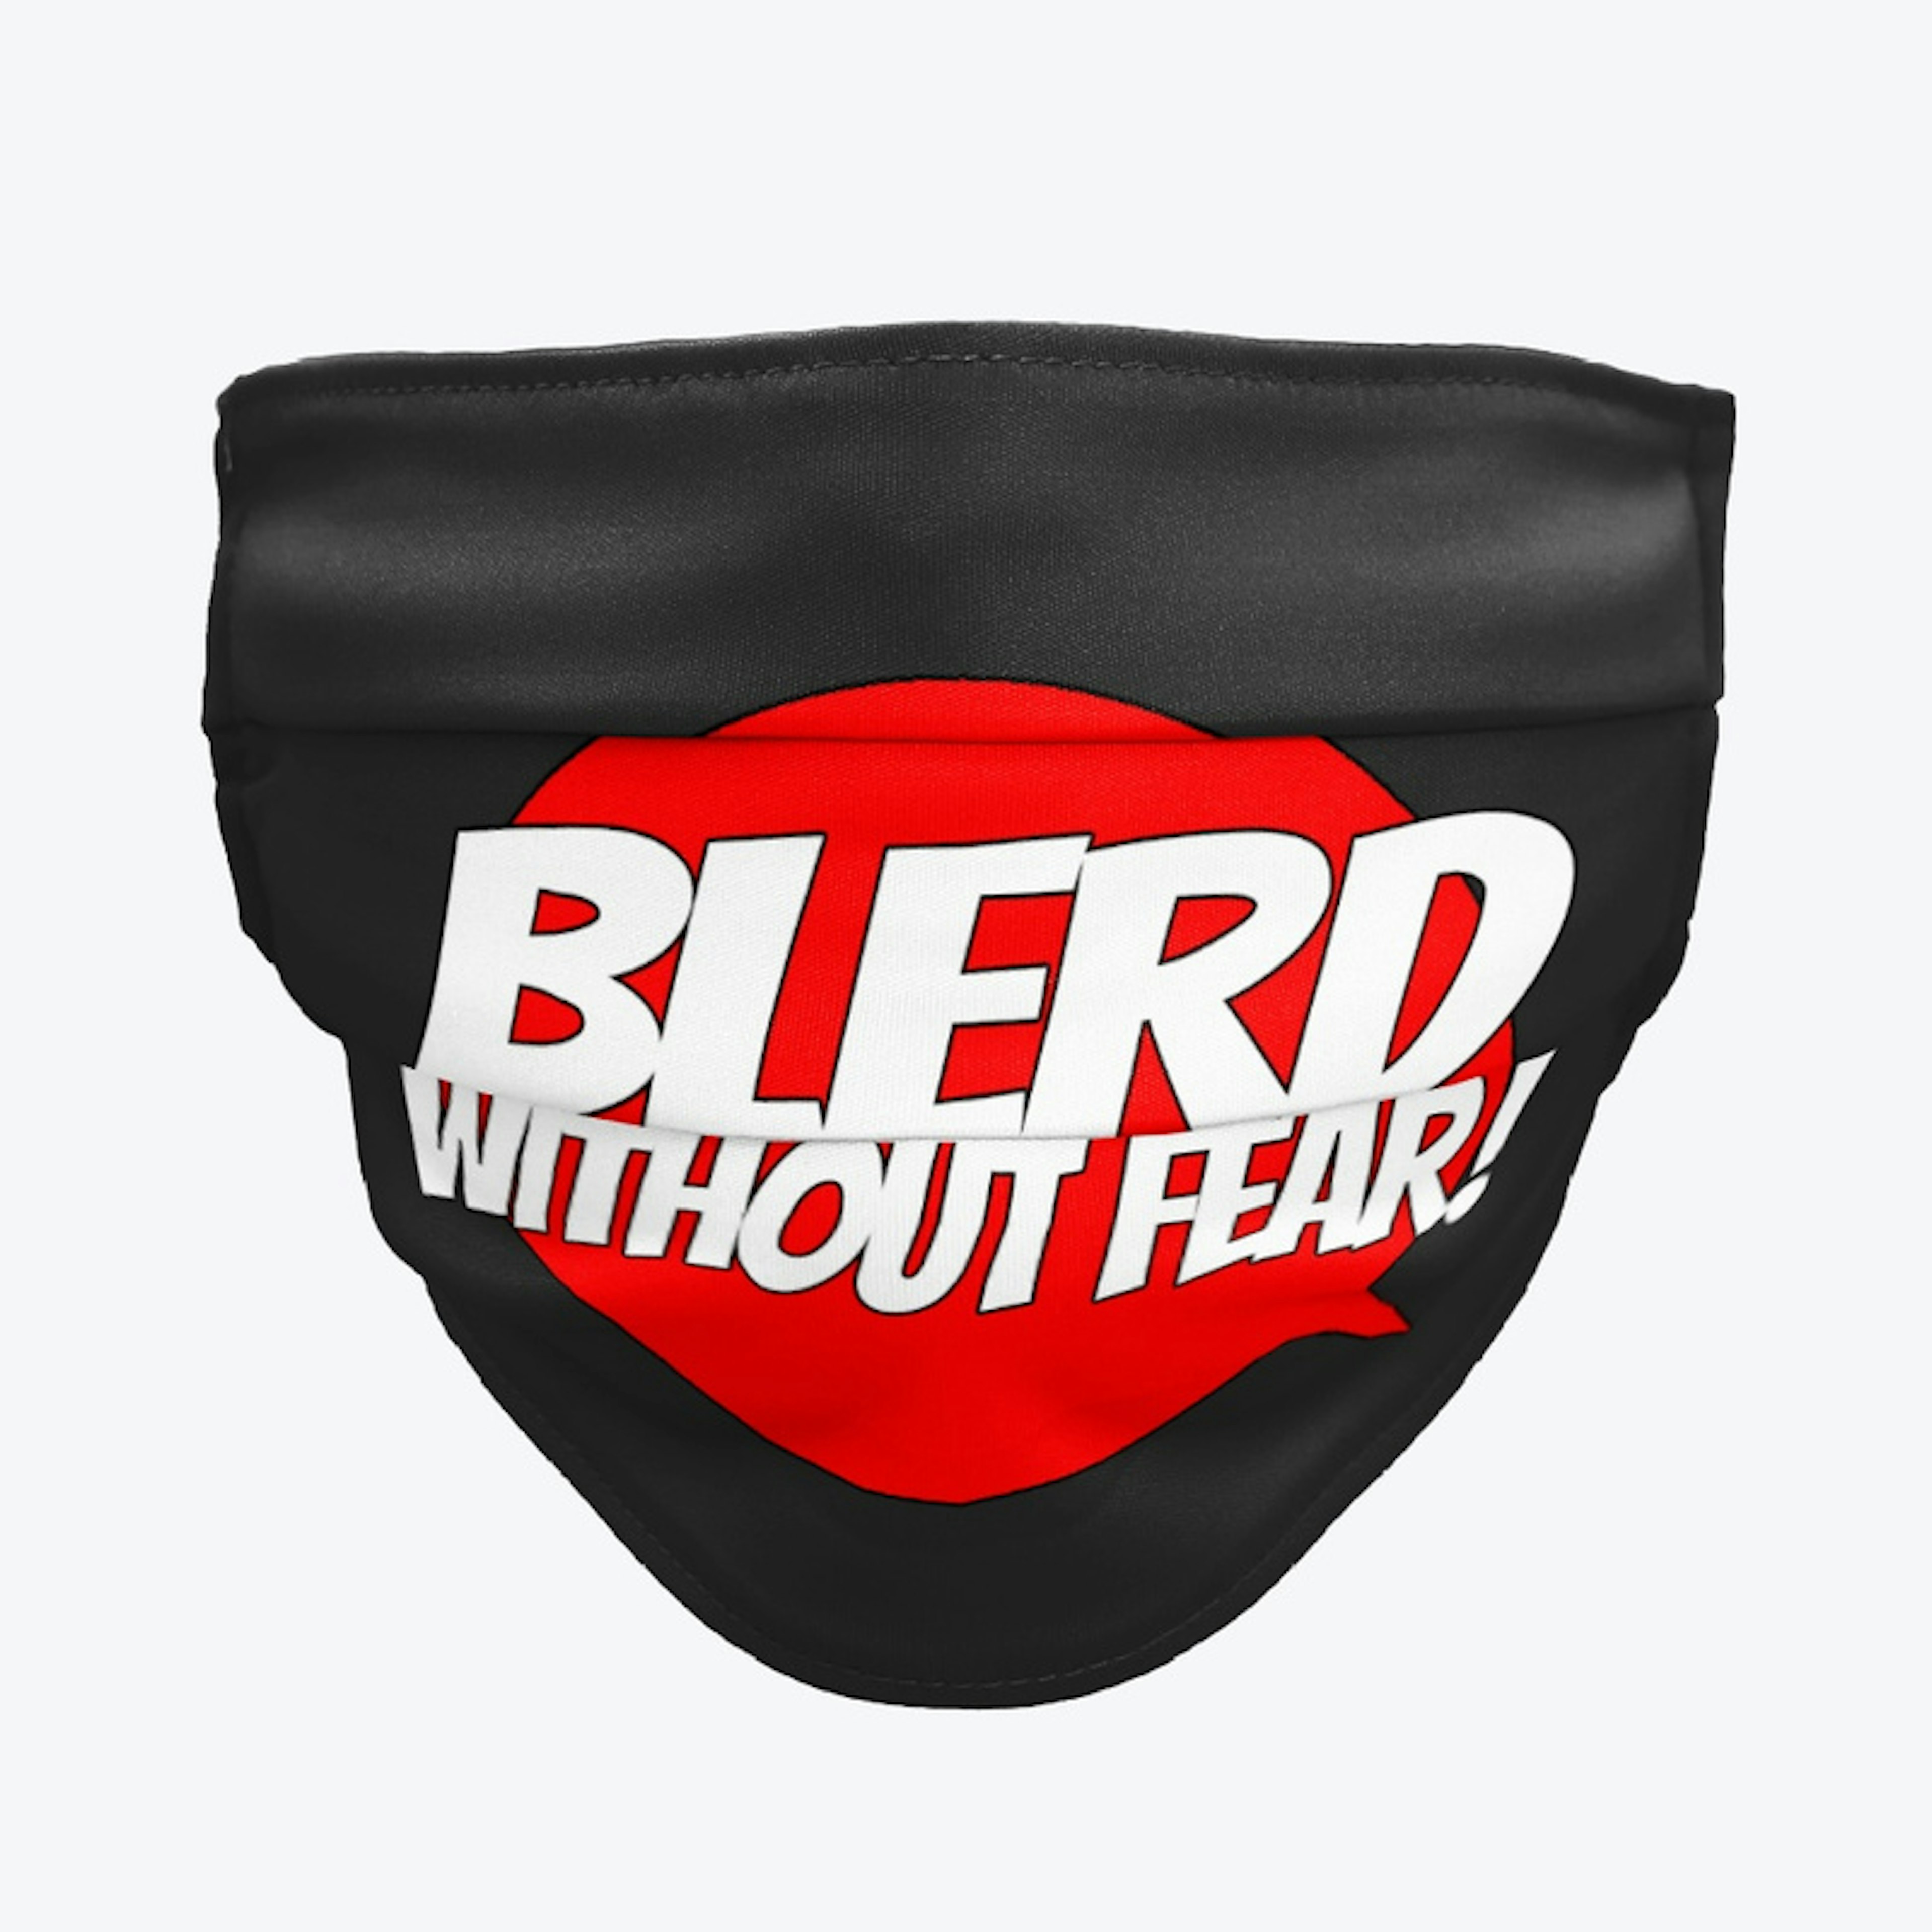 Blerd Without Fear Face Masks